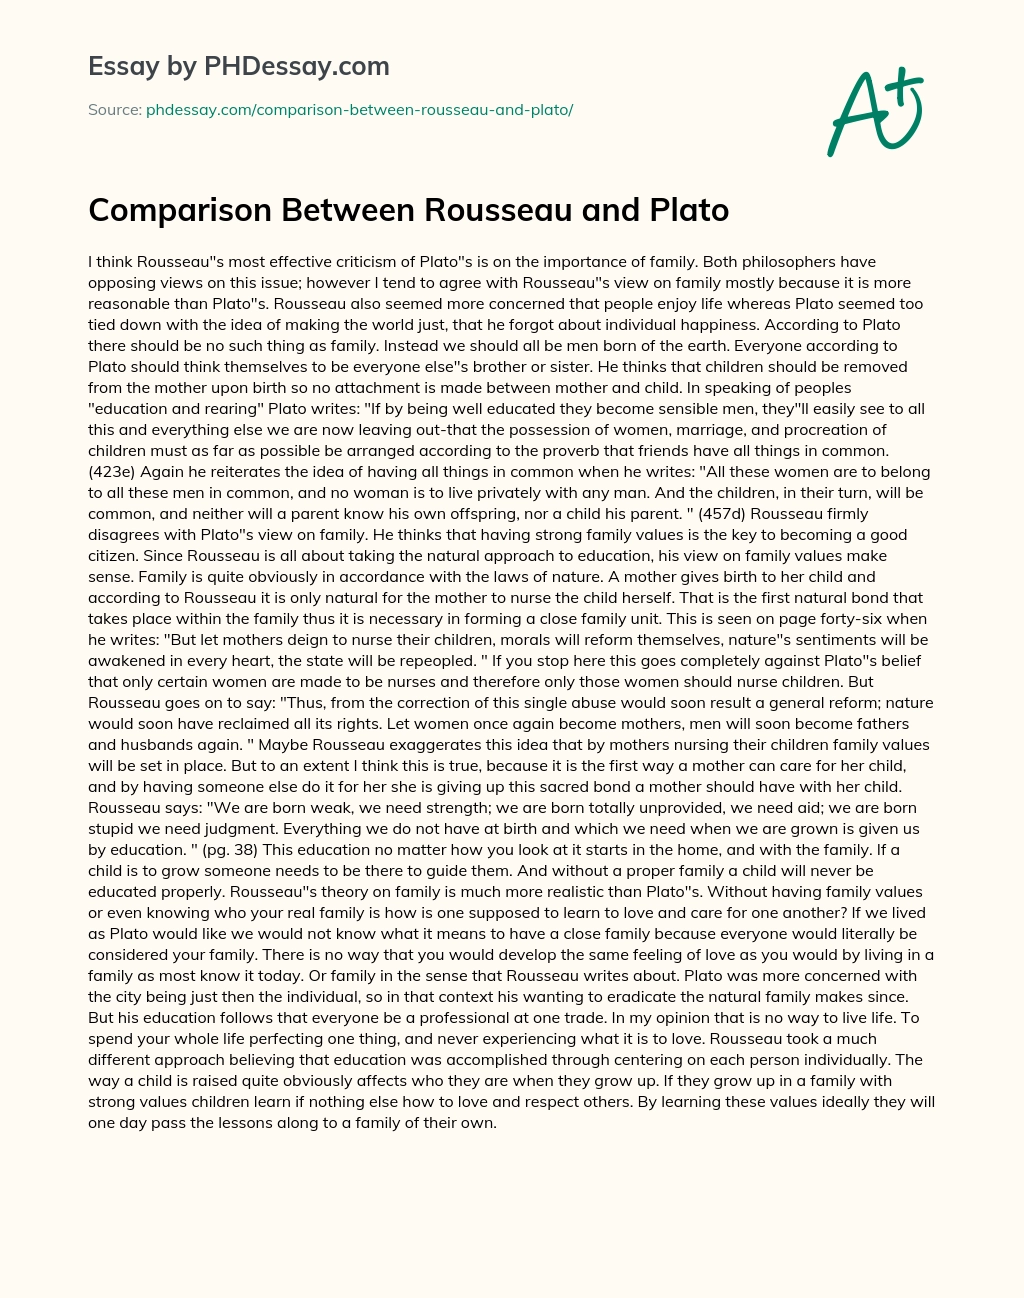 Comparison Between Rousseau and Plato essay